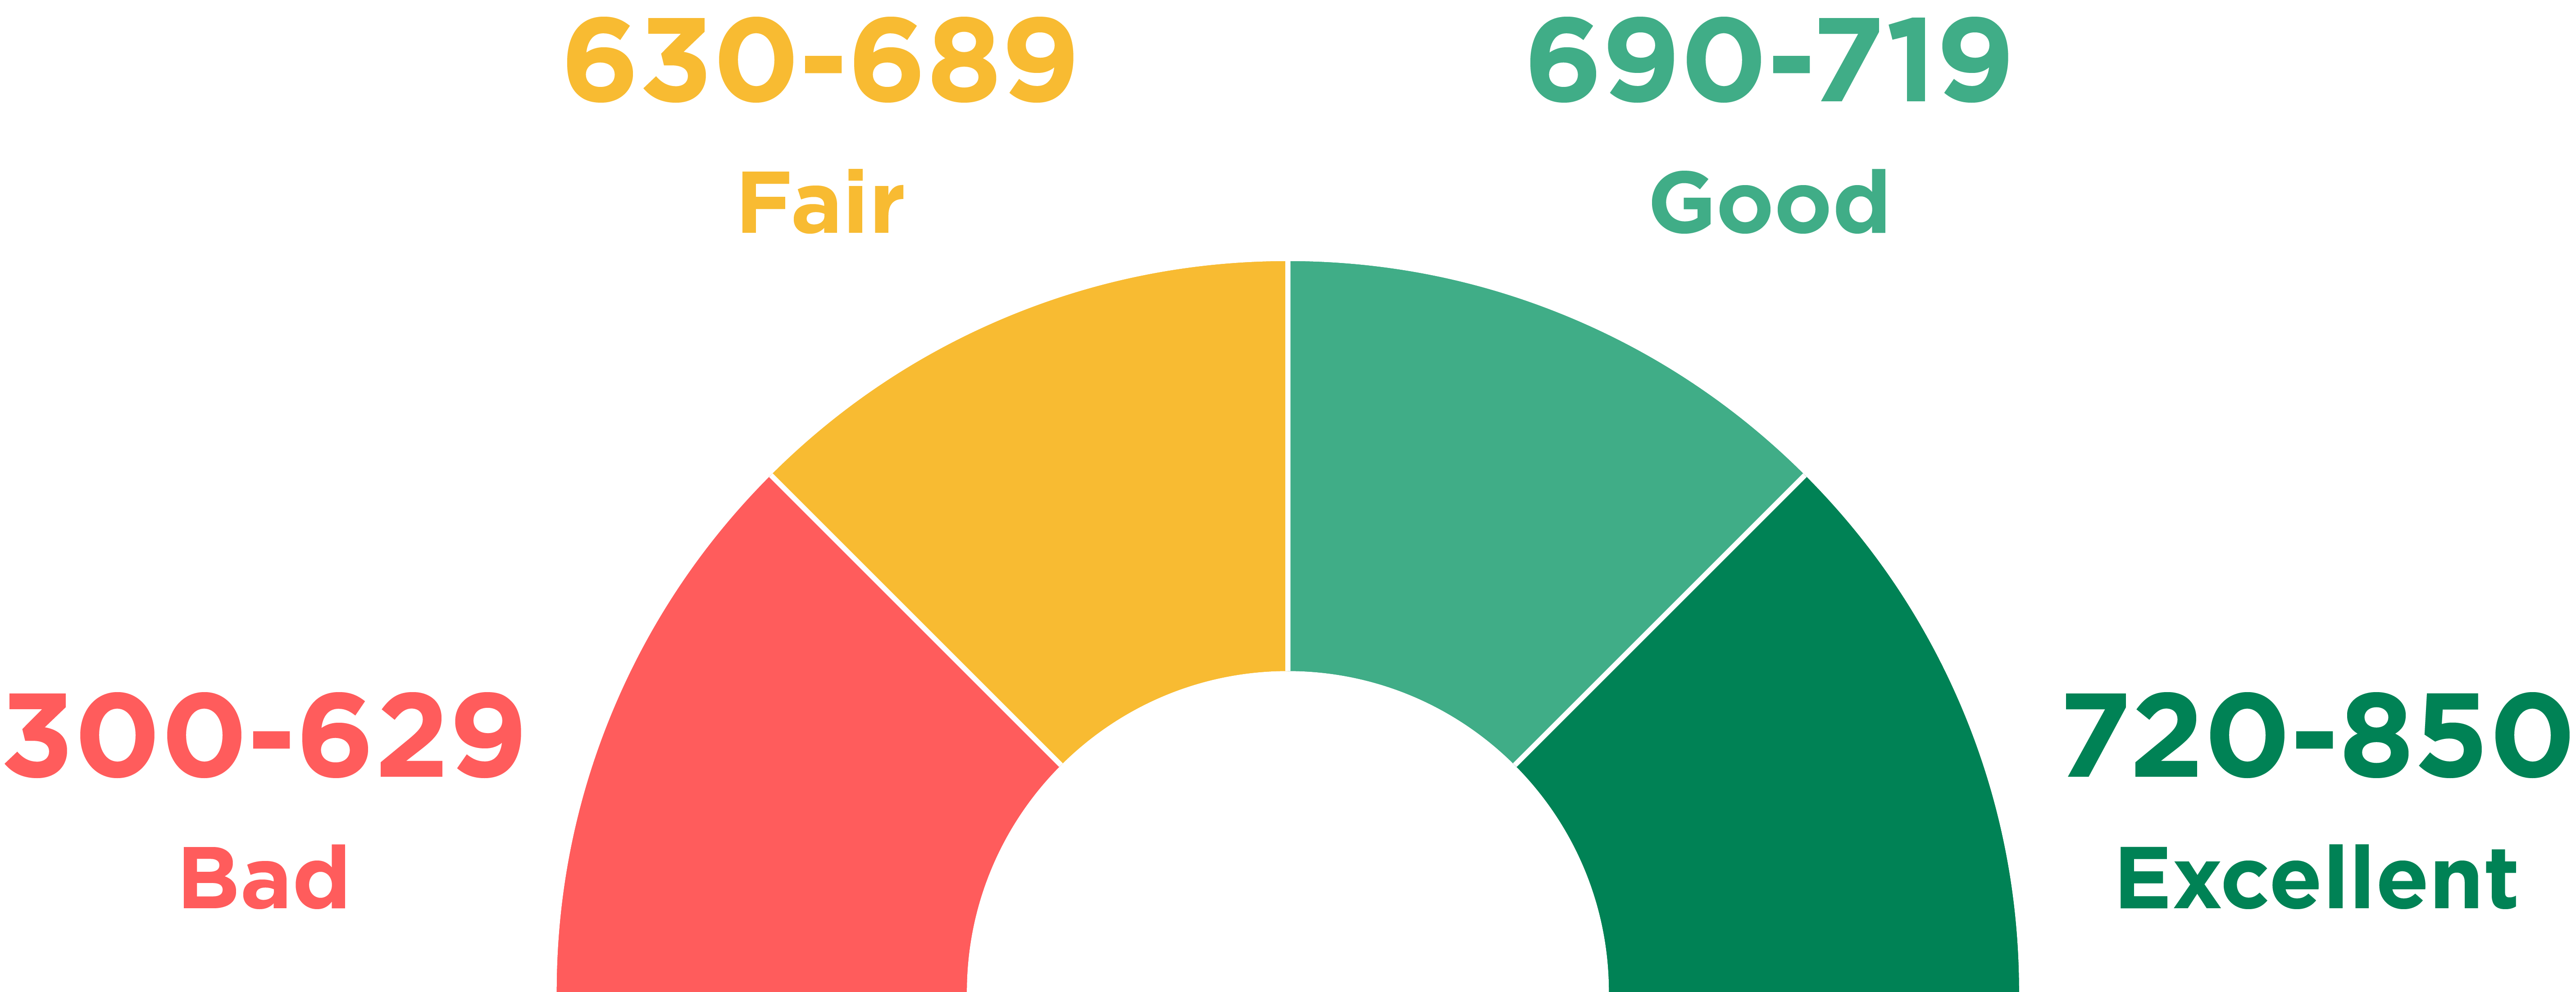 Credit Score Ranges: How Do You Compare? - NerdWallet